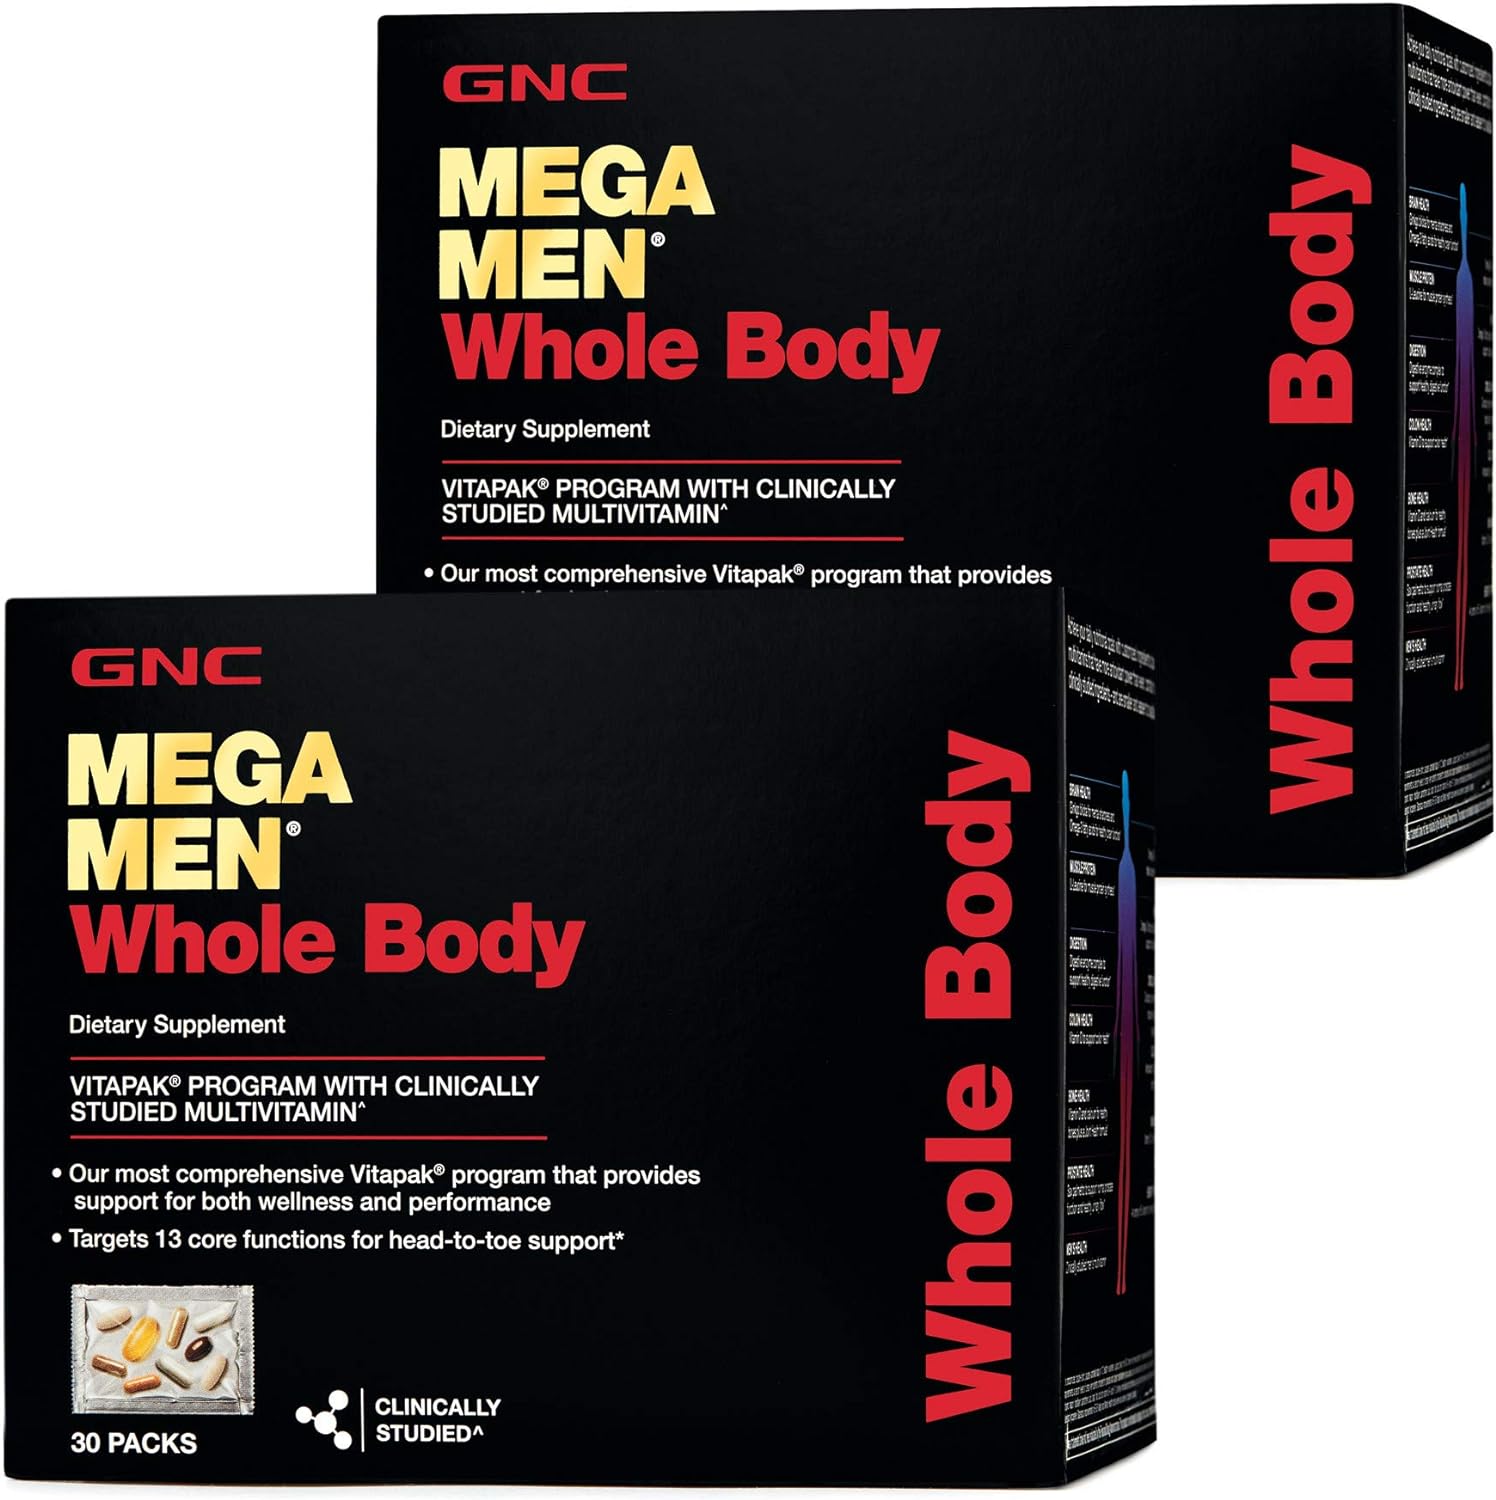 GNC Mega Men Whole Body Vitapak Capsule, Twin Pack, 30 Packs per Box, Supports Wellness and Performa